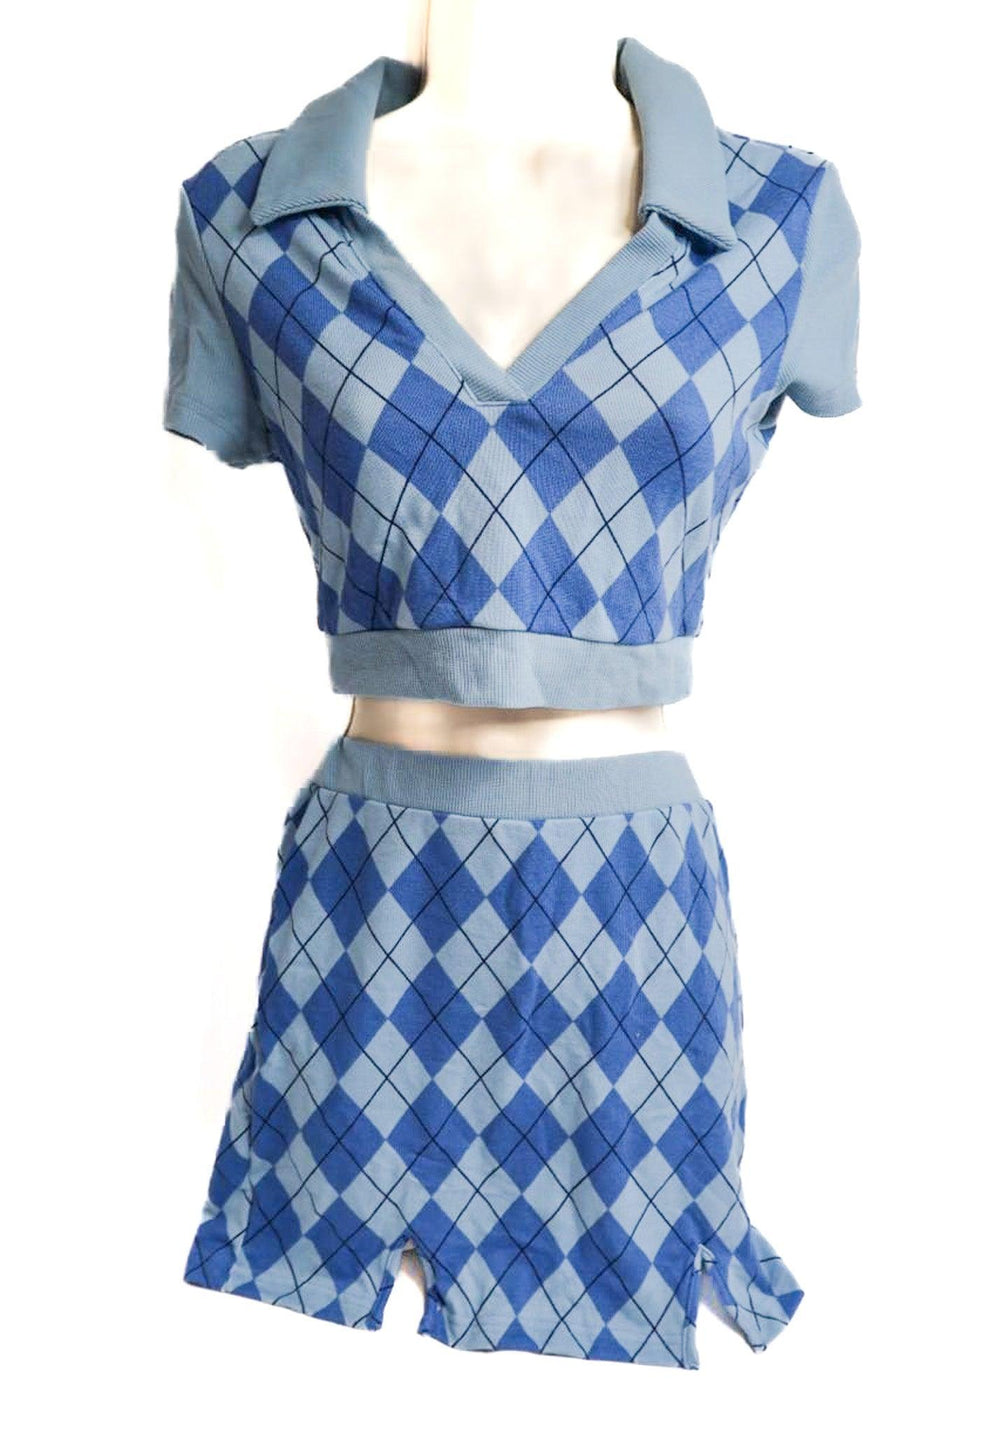 PPLUS - Socock - Vanessa Moon Blue Skirt Outfit + Glasses - FANS UTOPIA